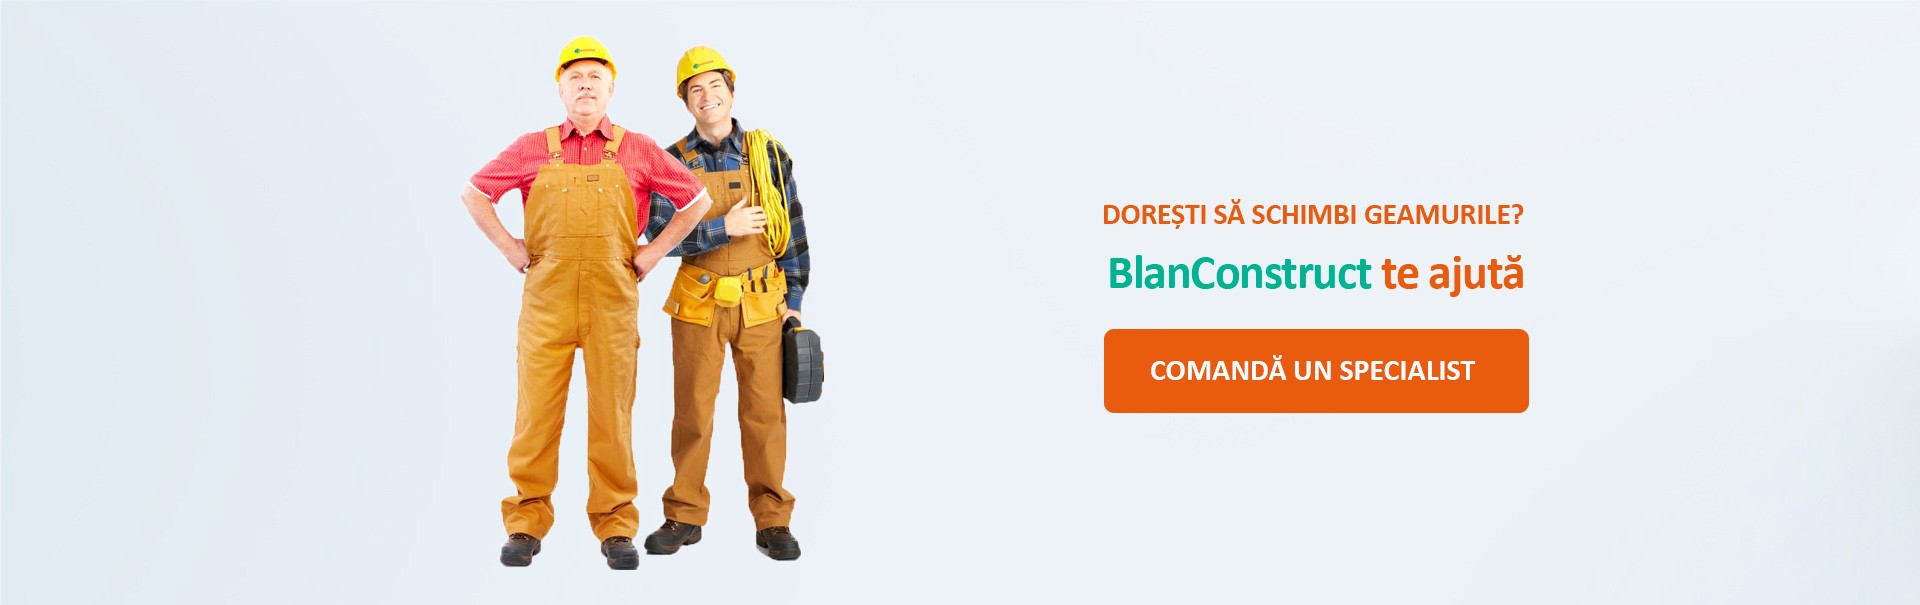 BlanConstruct